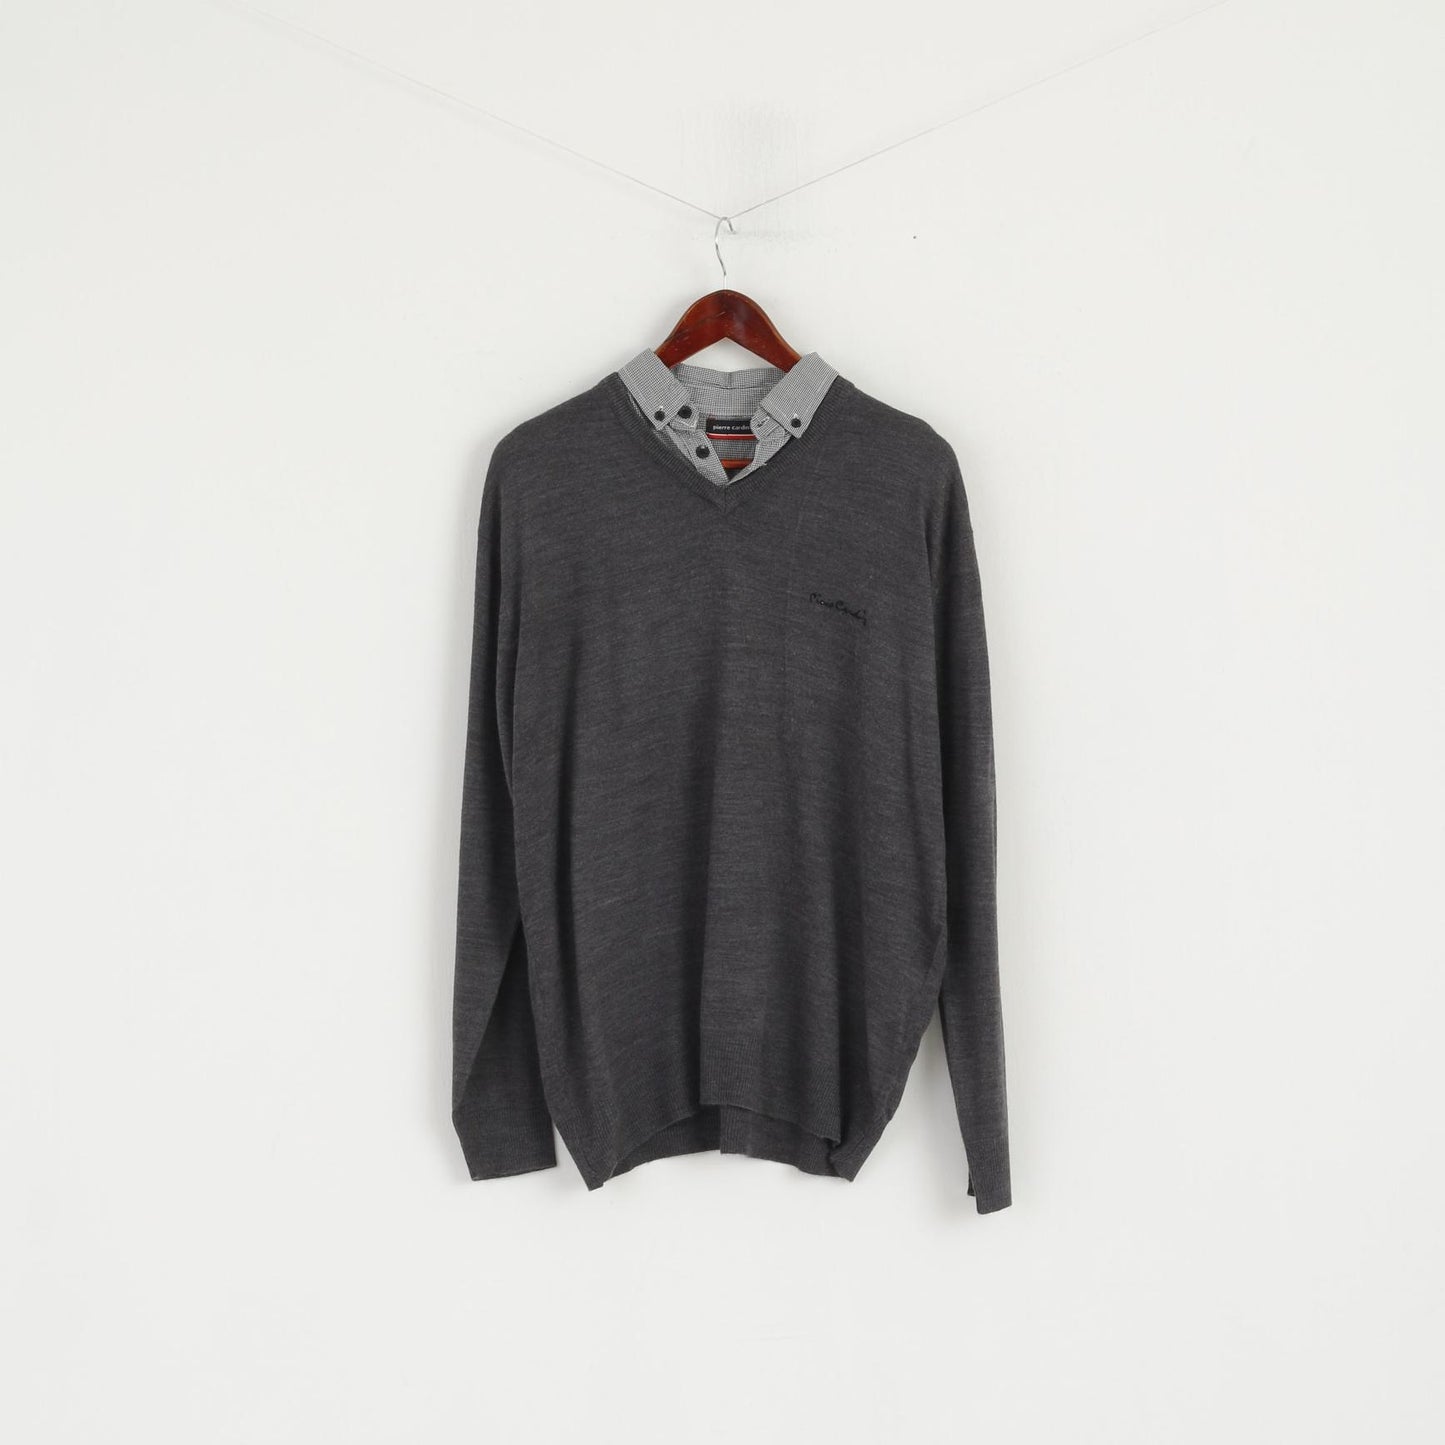 Pierre Cardin Men M Jumper Grey V Neck Collared Elegant Acrylic Light Sweater